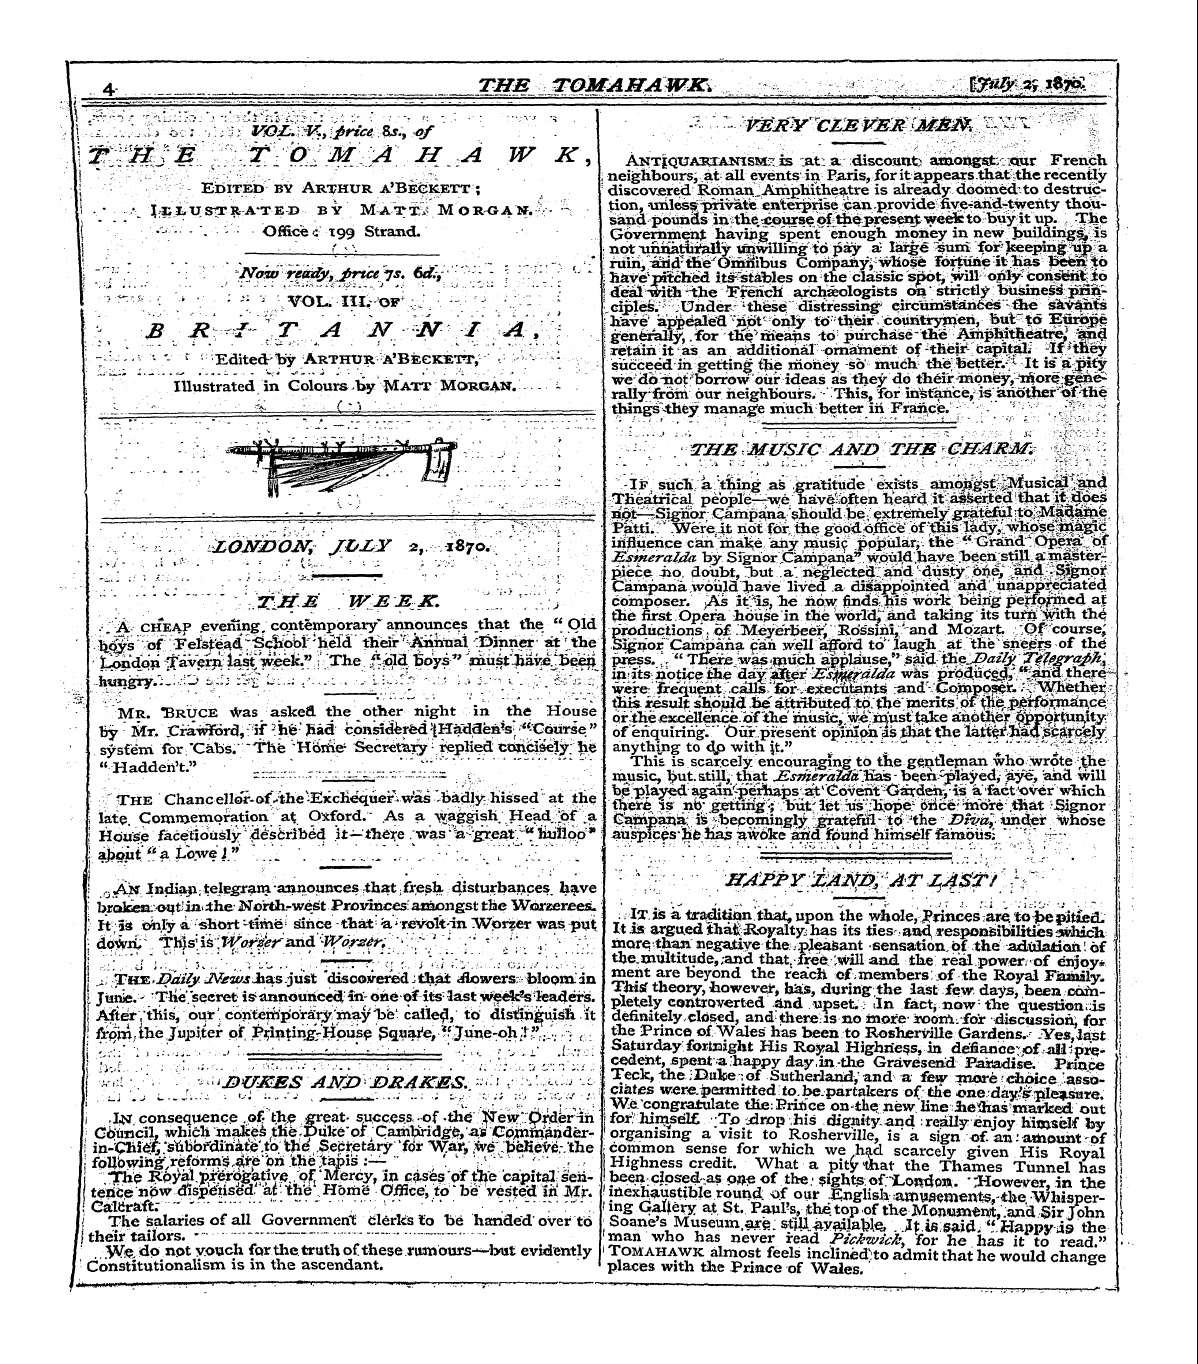 Tomahawk (1867-1870): jS F Y, 1st edition - ¦ _ ¦ ^¦-¦¦¦¦ - ¦ 'P^^^I^ Jmj^ ' ¦